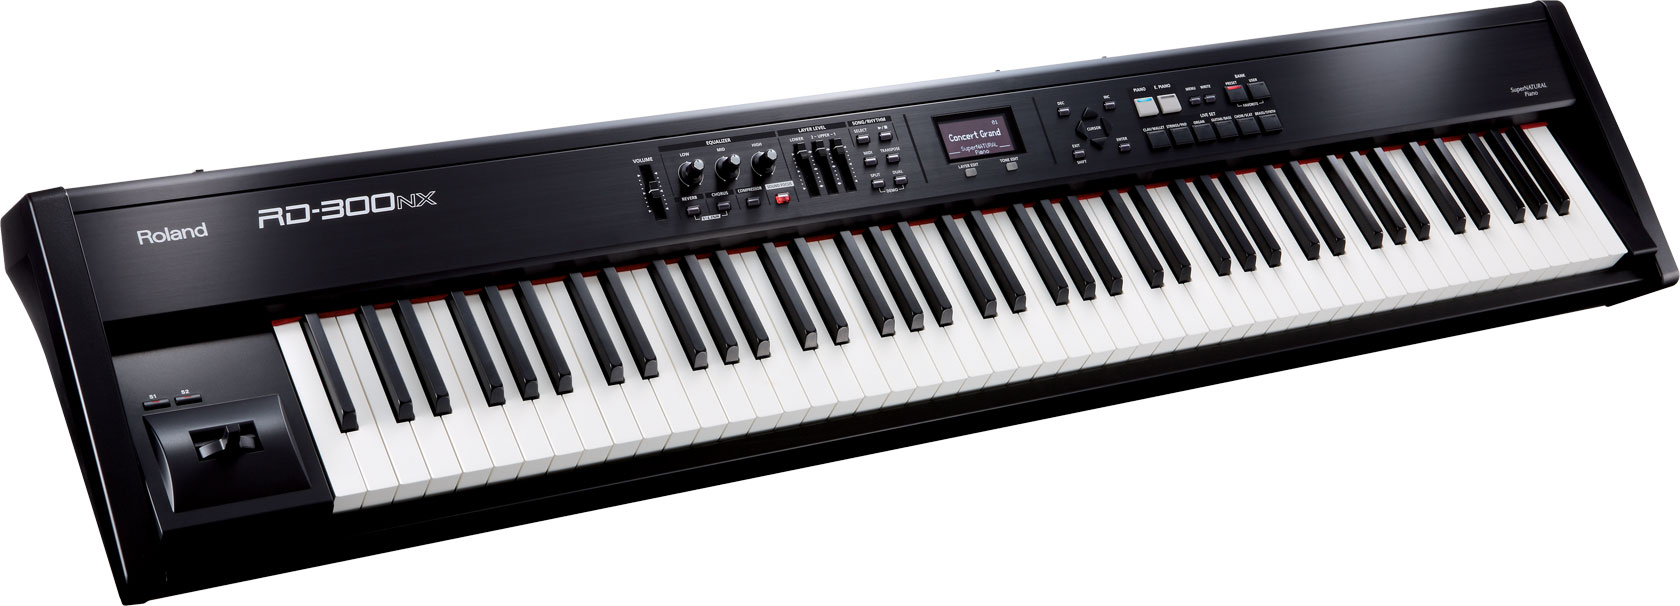 Roland - RD-300NX | Digital Piano